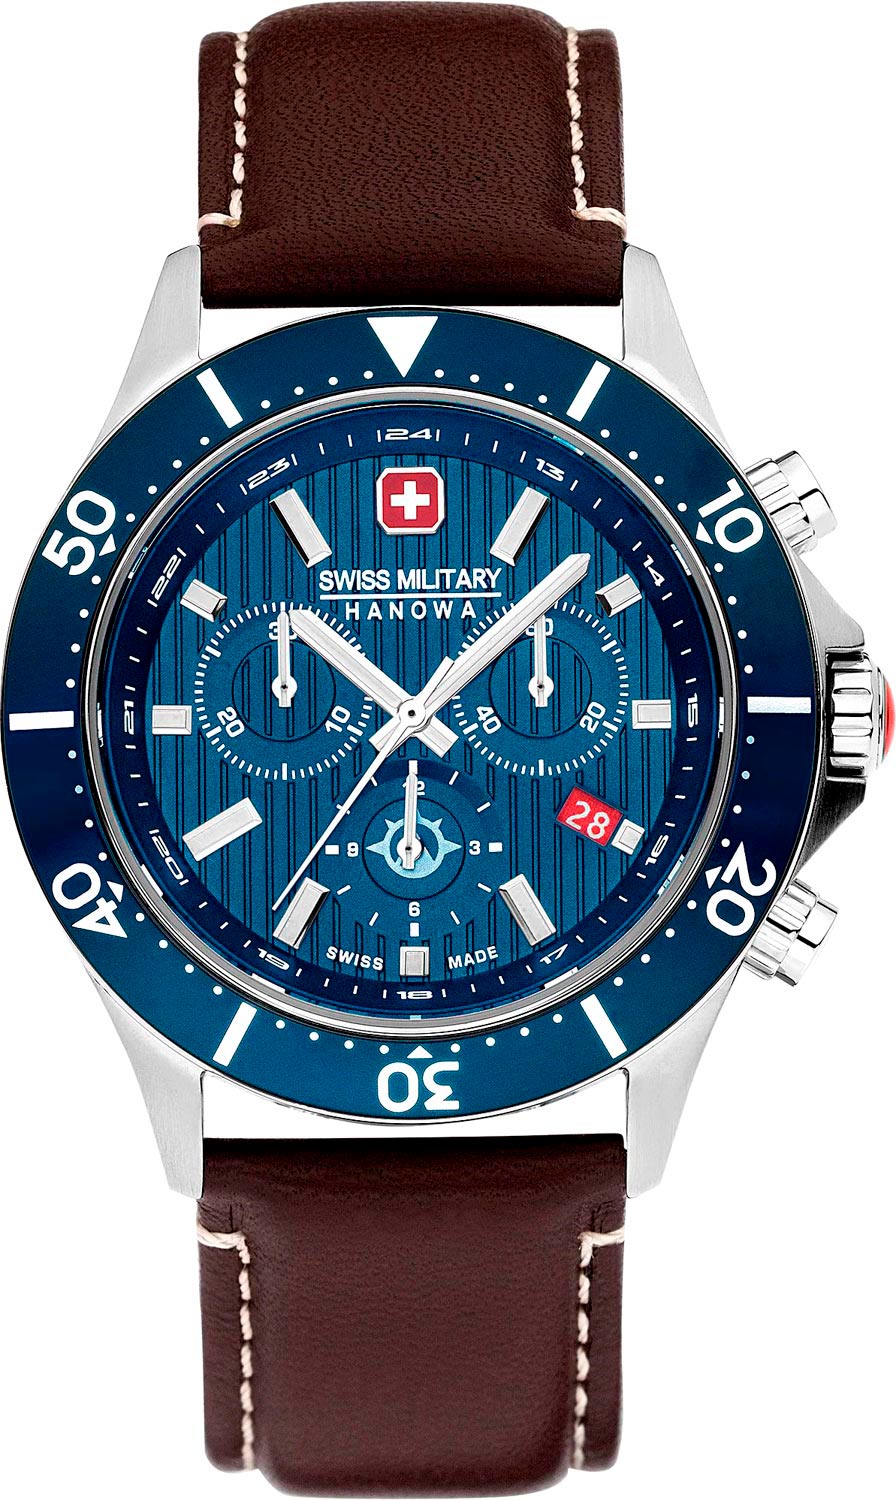 Швейцарские наручные часы Swiss Military Hanowa SMWGC2100706 с хронографом